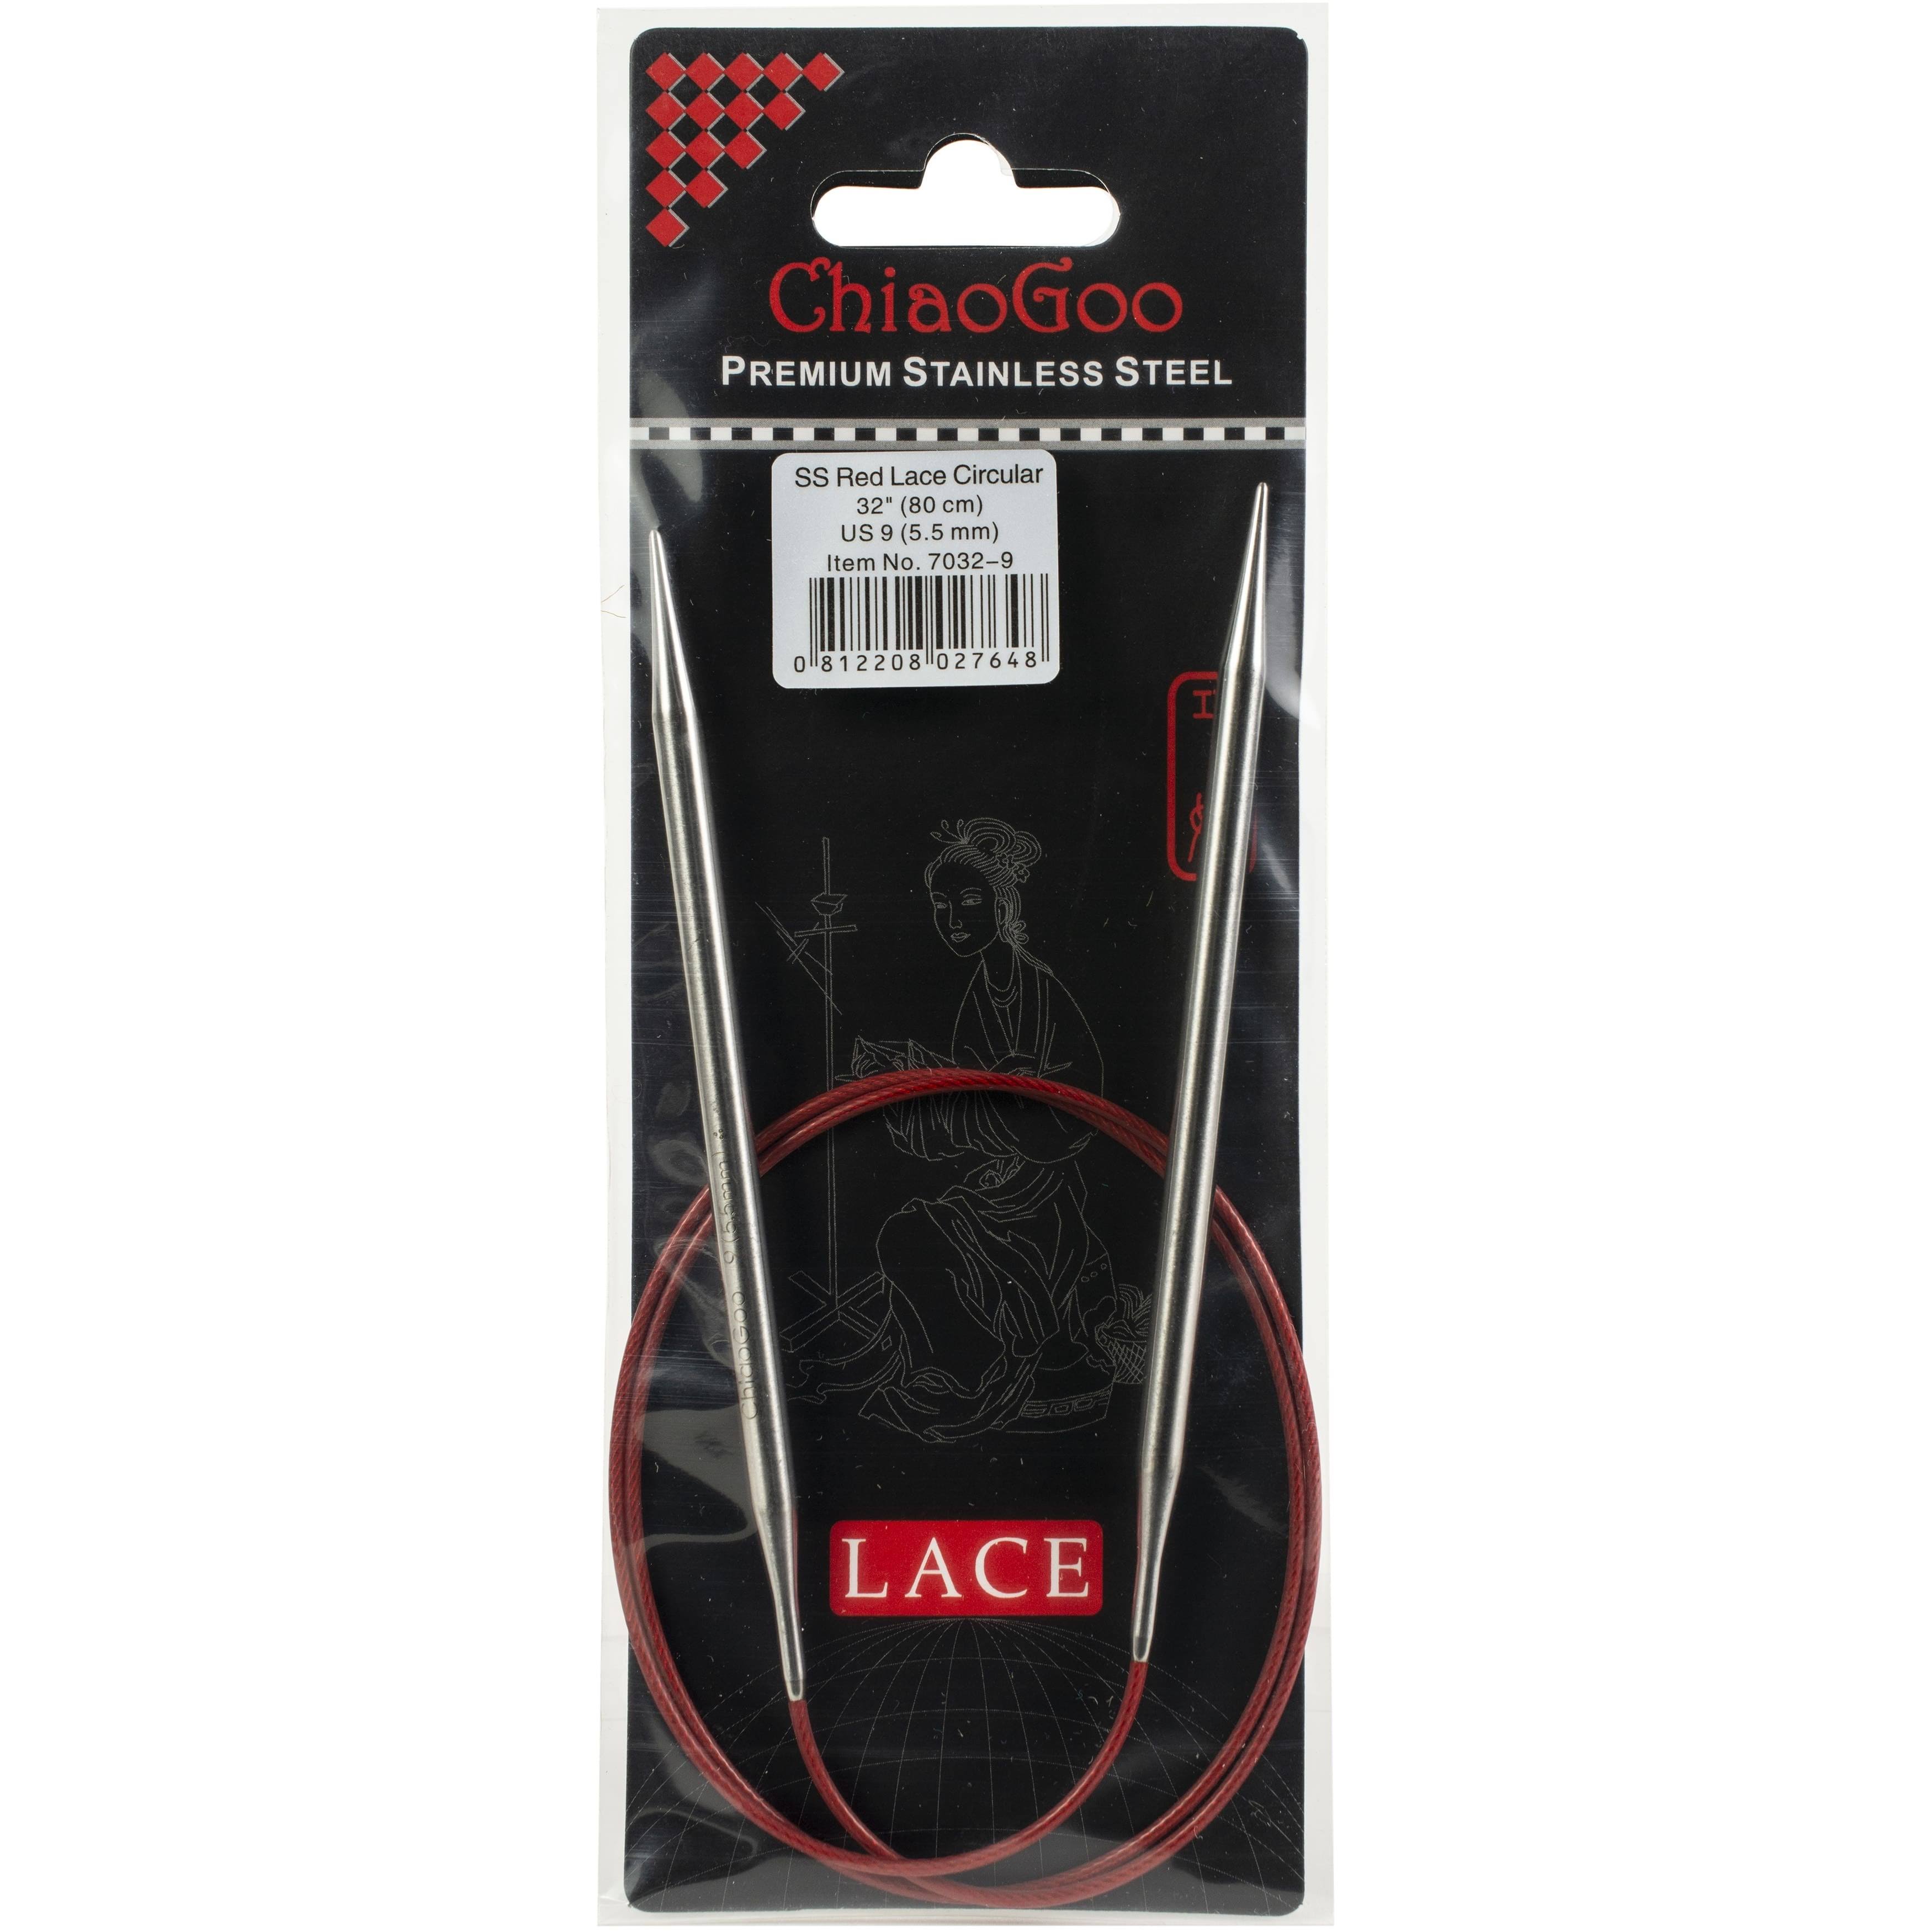 Chiaogoo Knit Red Lace Circular Knitting Needles - 5.5mm